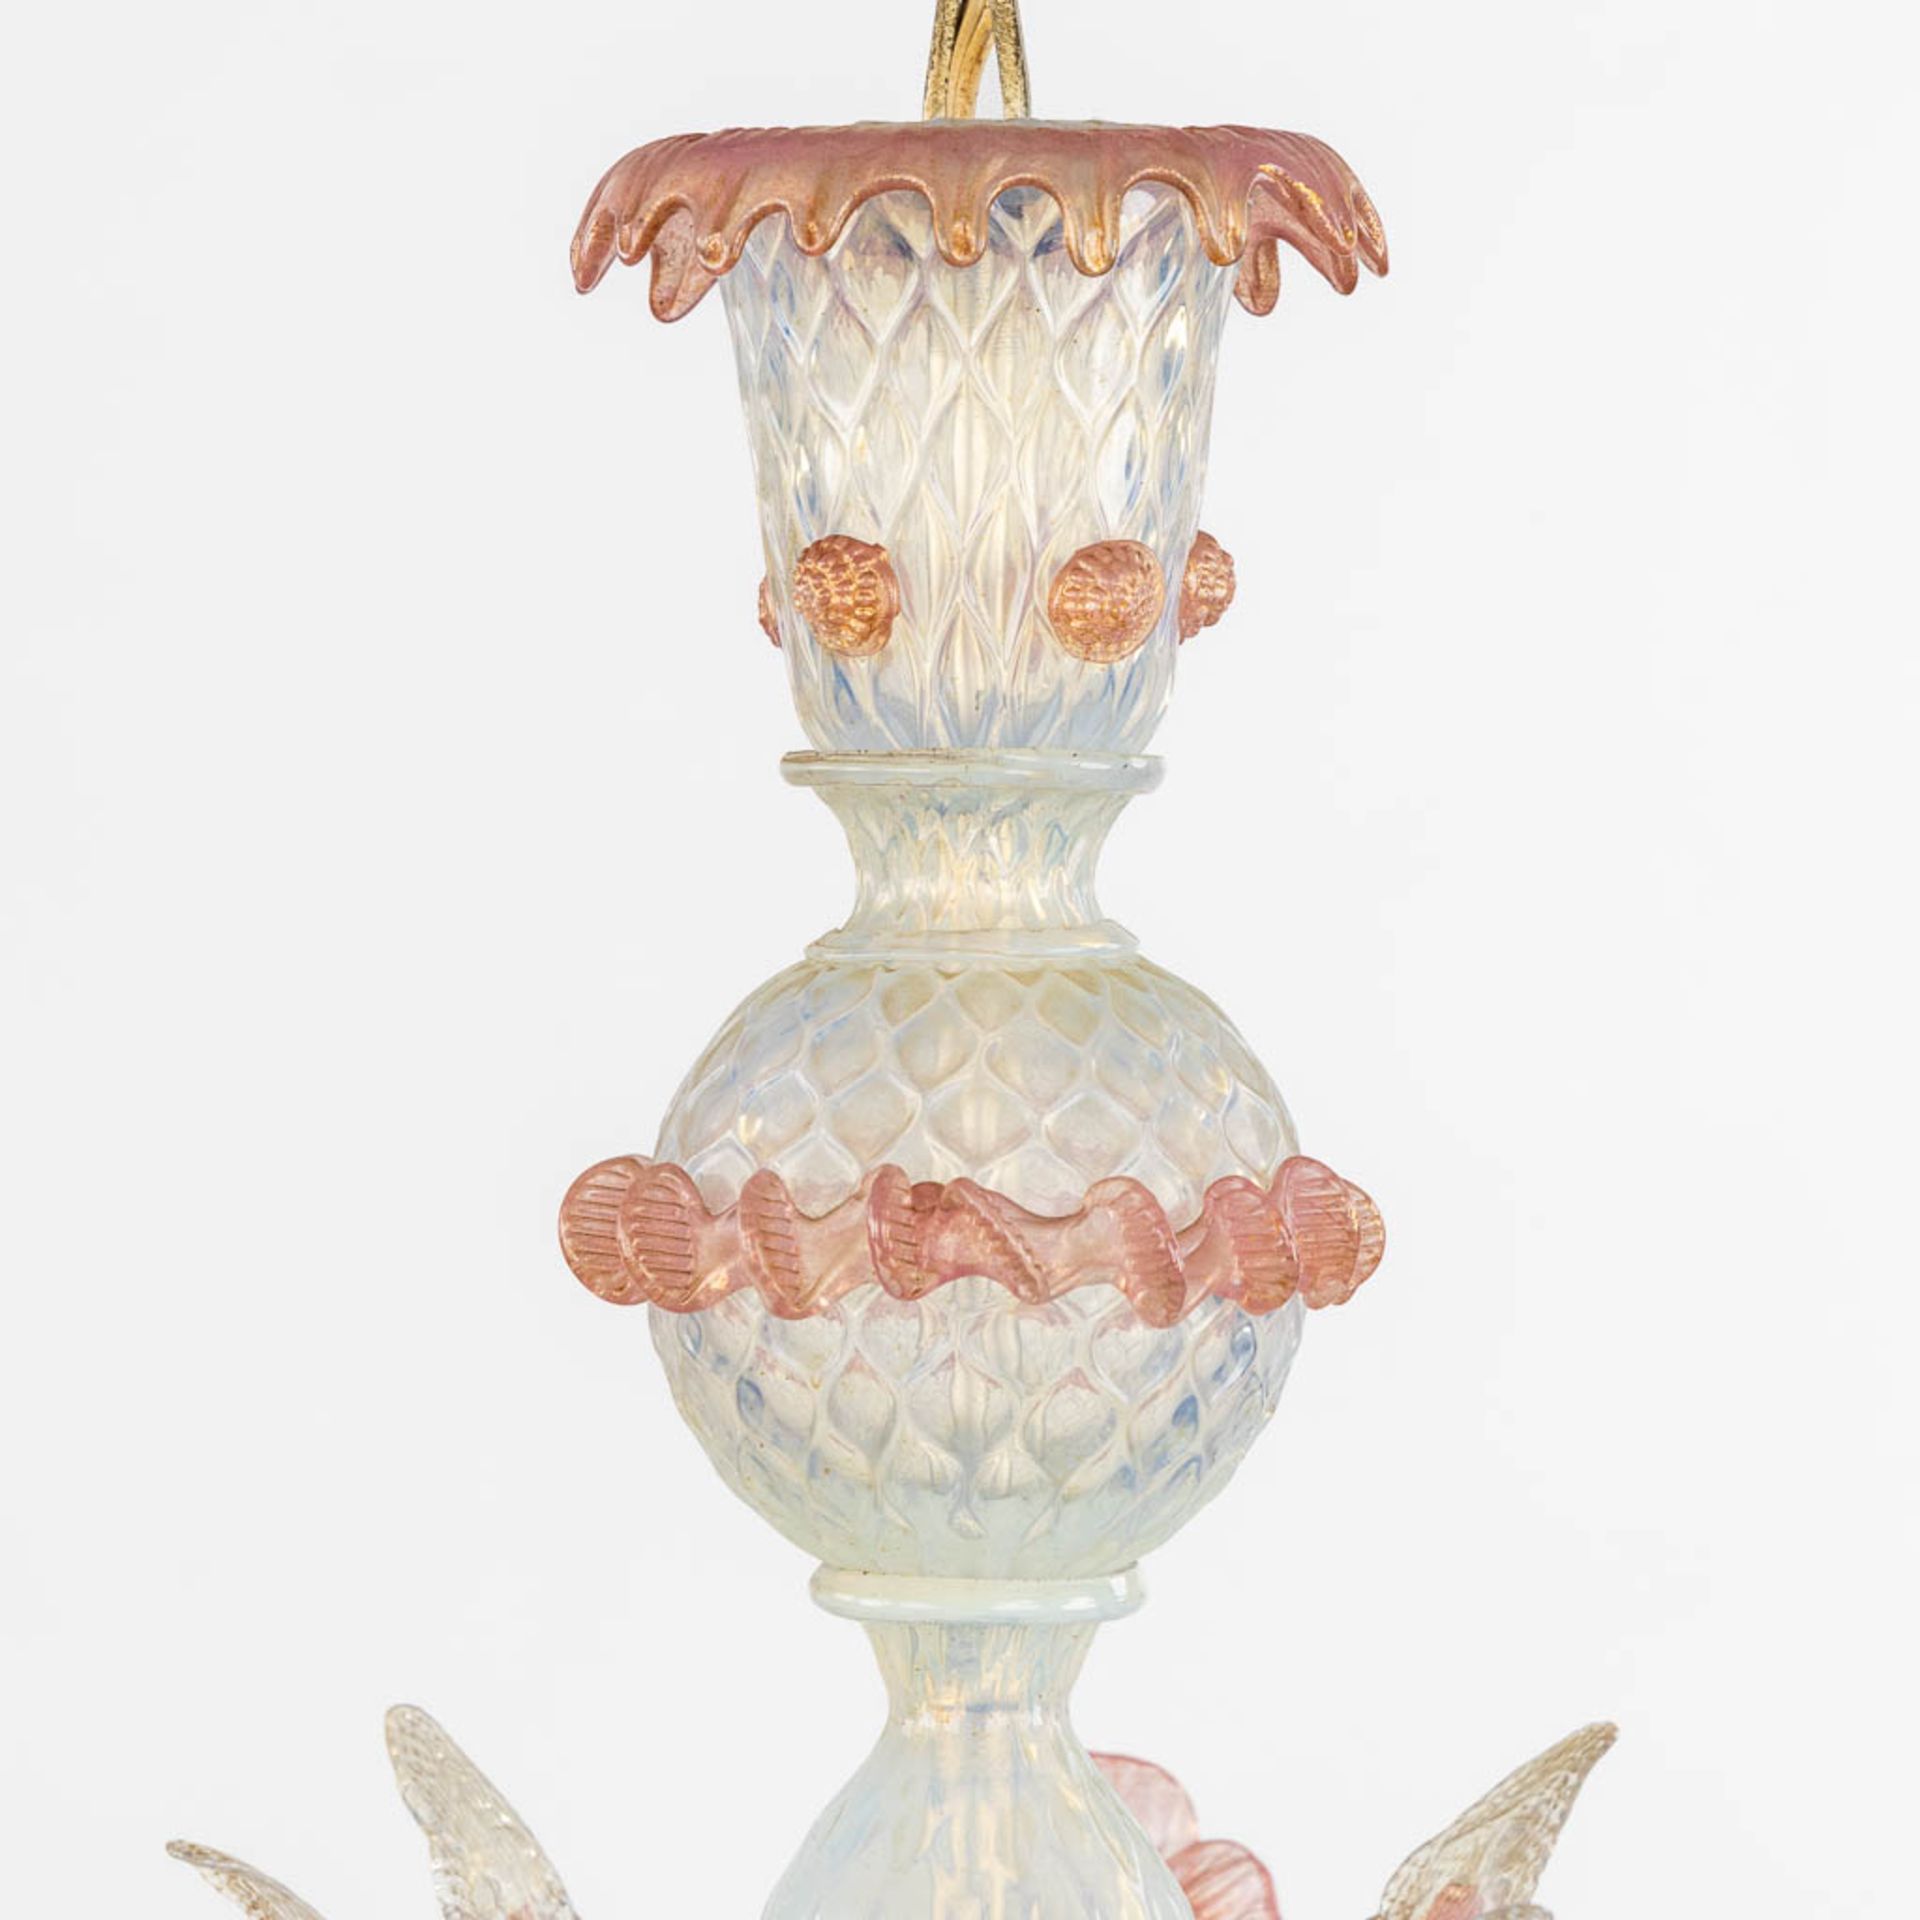 A decorative Venetian glass chandelier, red and white glass. 20th C. (H:70 x D:54 cm) - Bild 4 aus 12